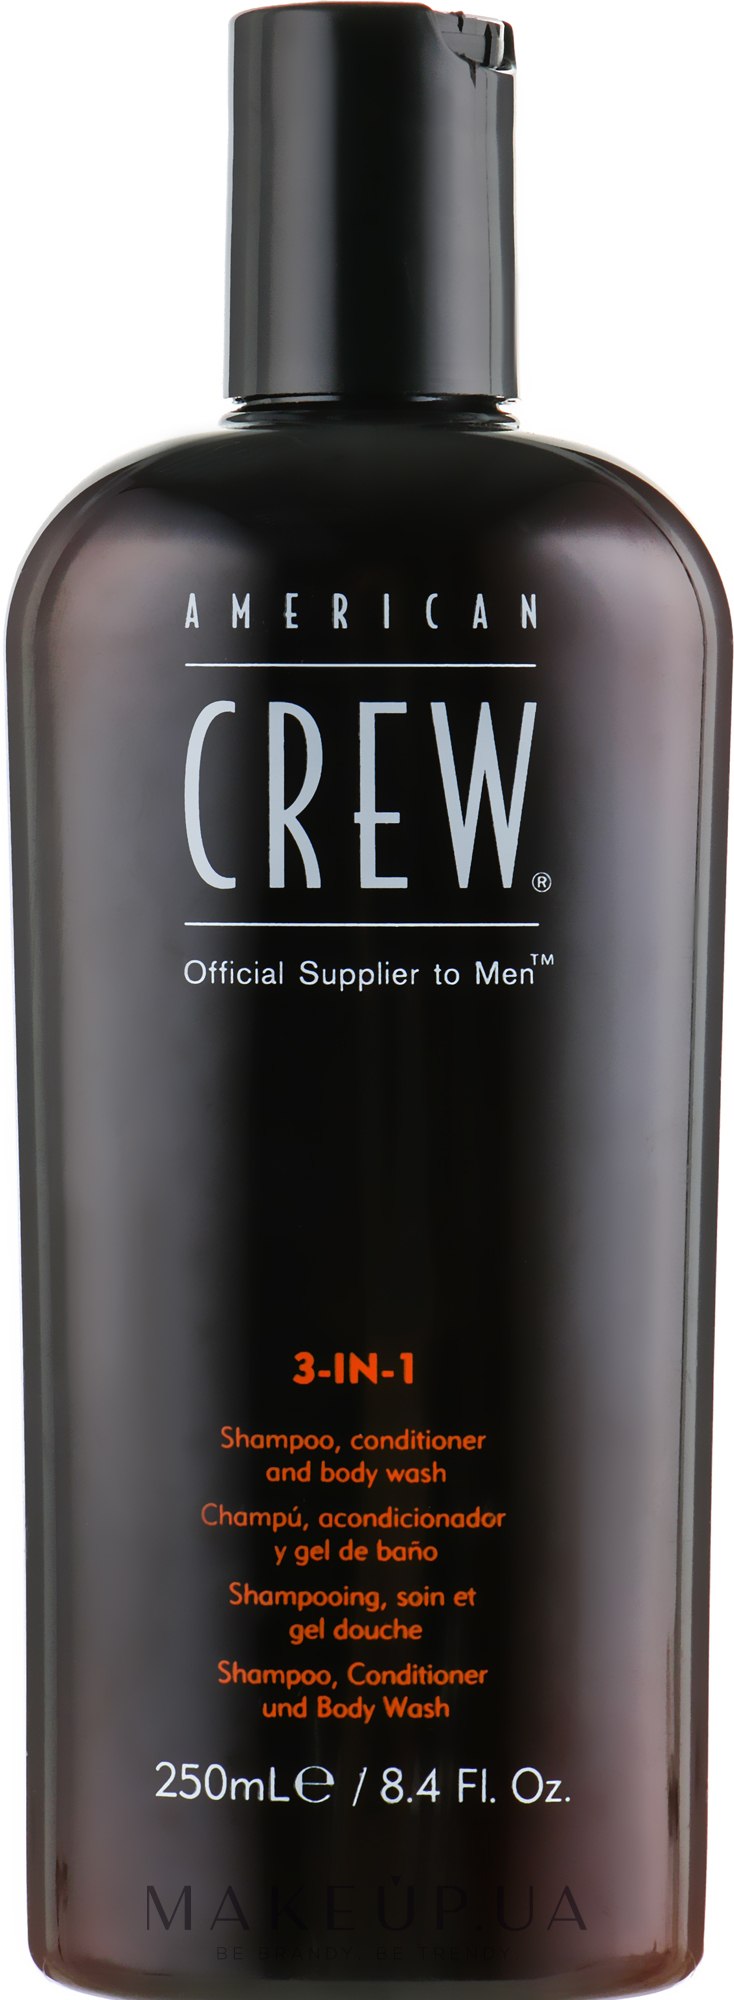 Засіб 3-в-1 по догляду за волоссям і тілом - American Crew Classic 3-in-1 Shampoo, Conditioner&Body Wash — фото 250ml